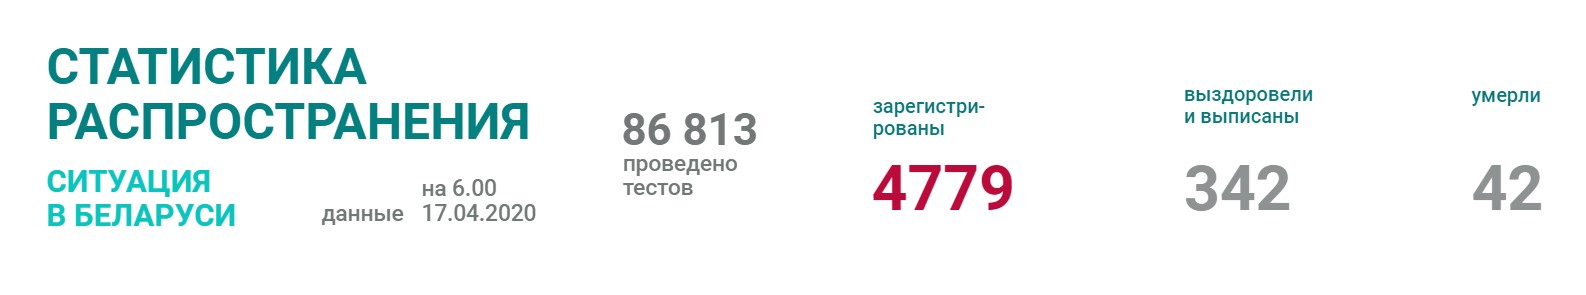 4779 случаев коронавируса выявлено в Беларуси